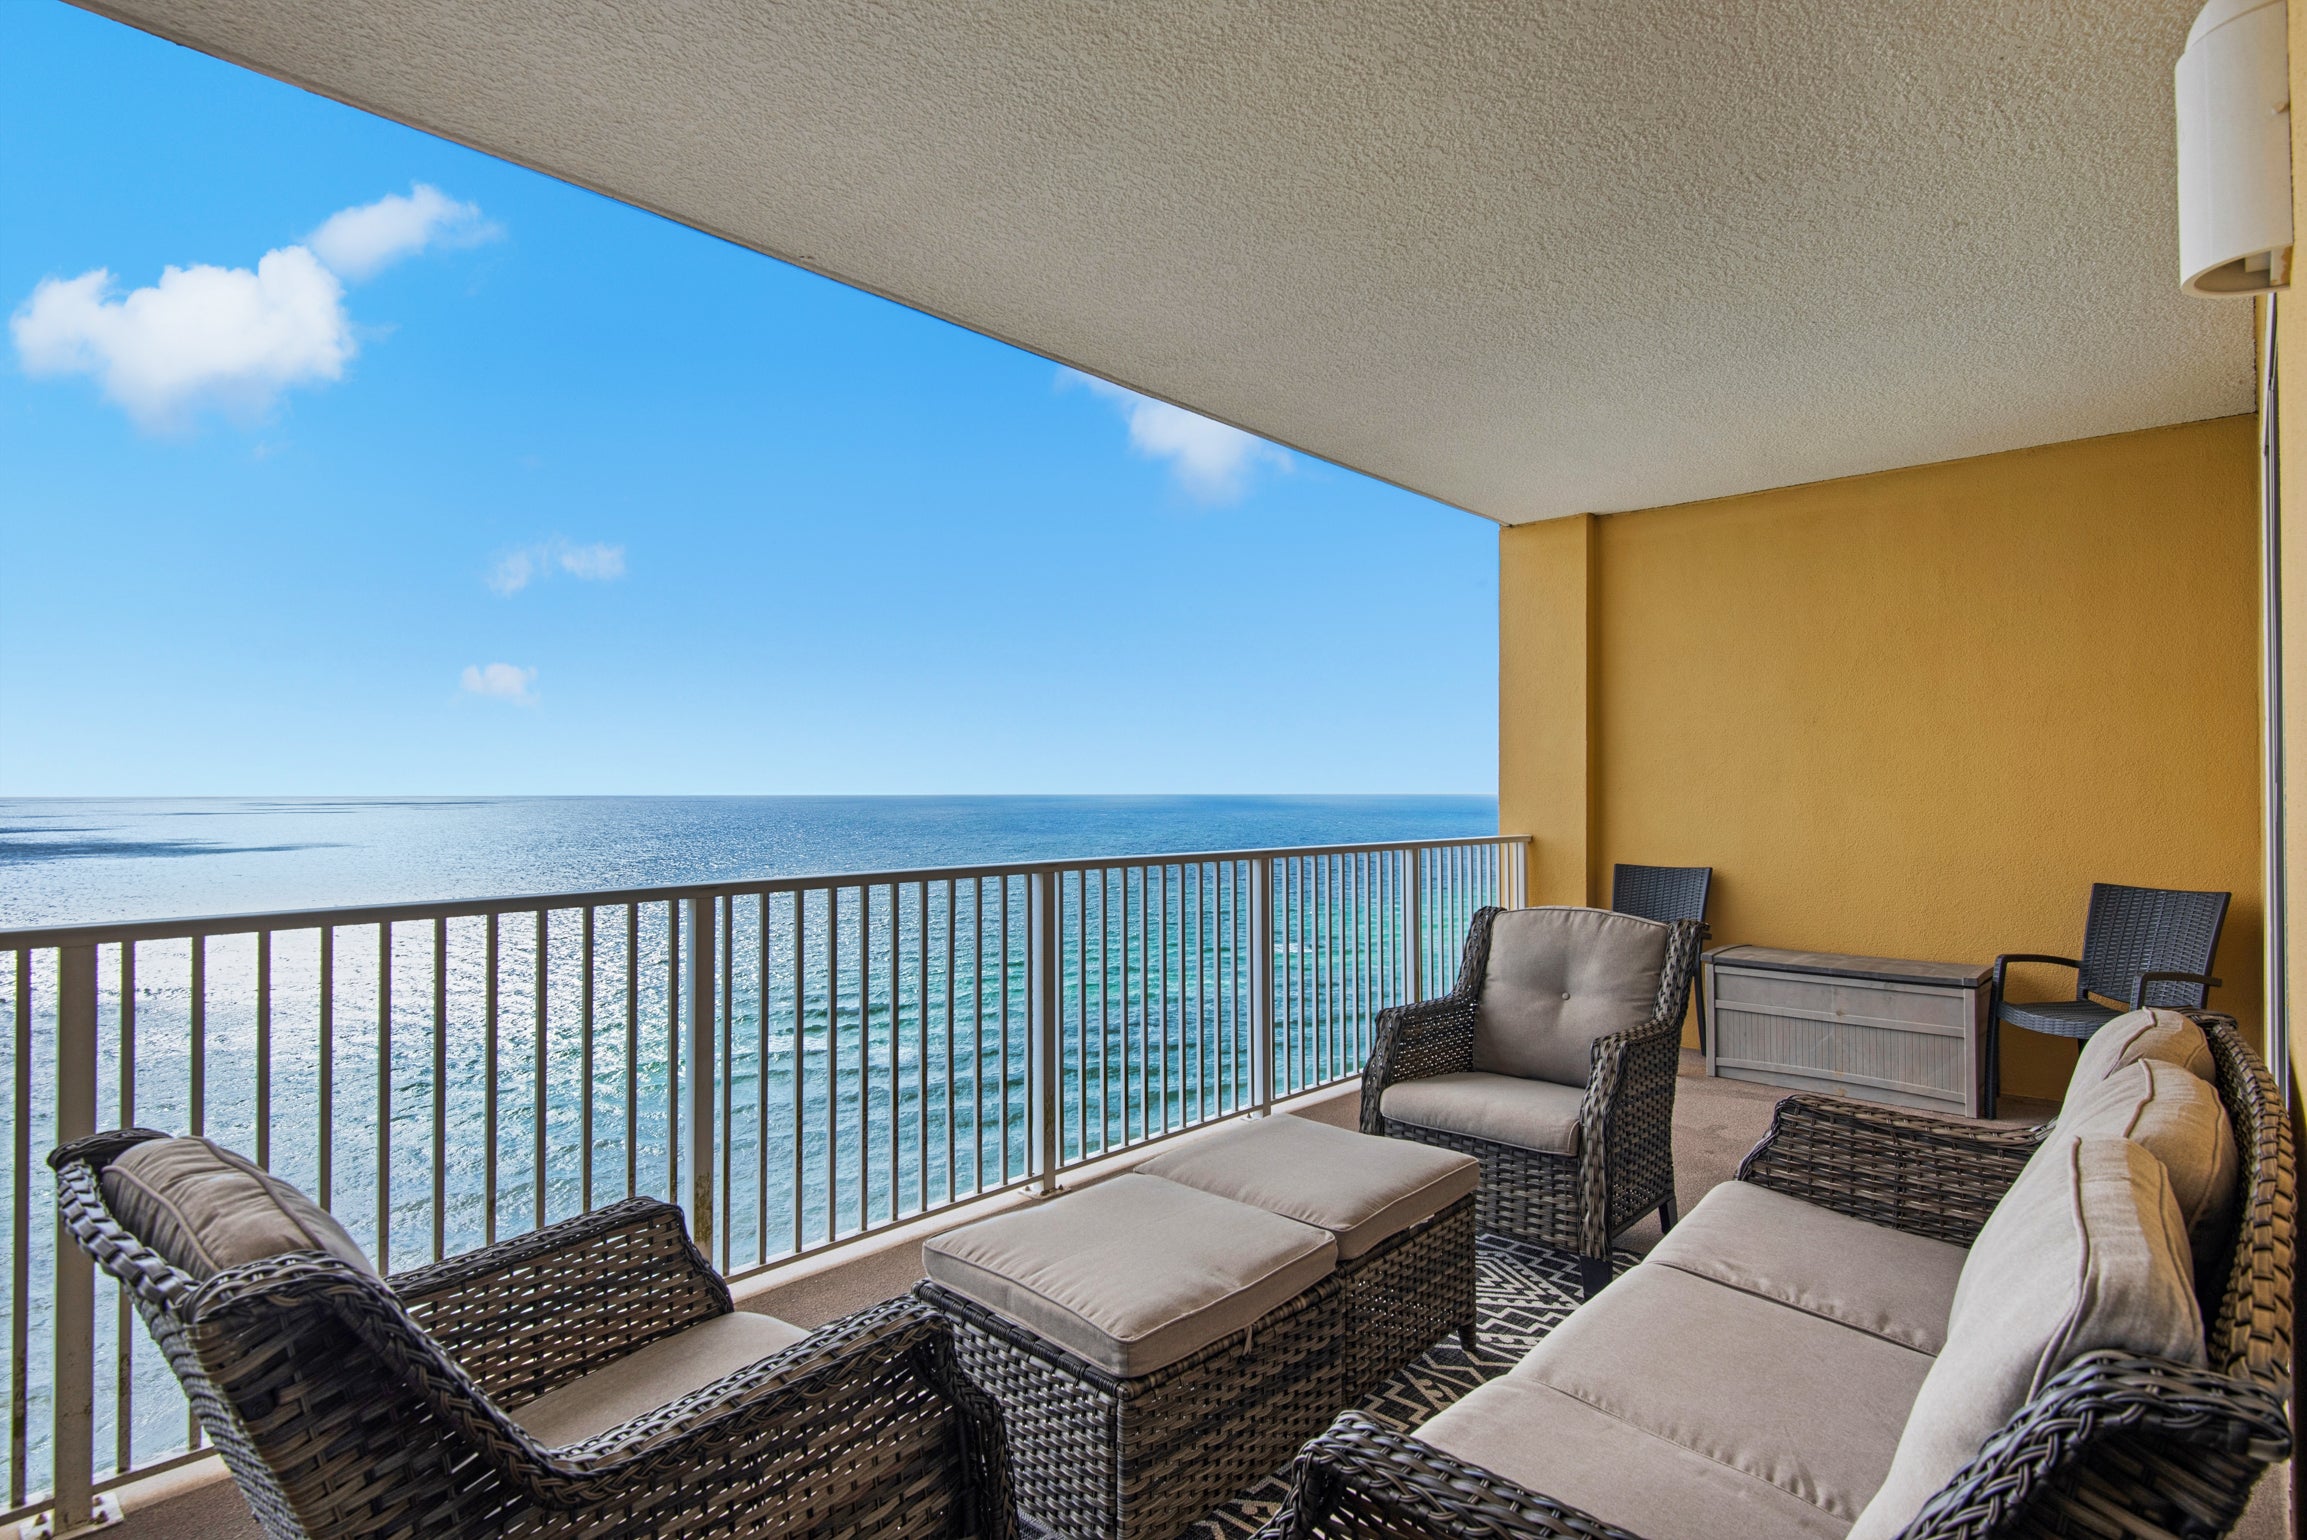 Tropic Winds 2306 - Penthouse Paradise balcony views